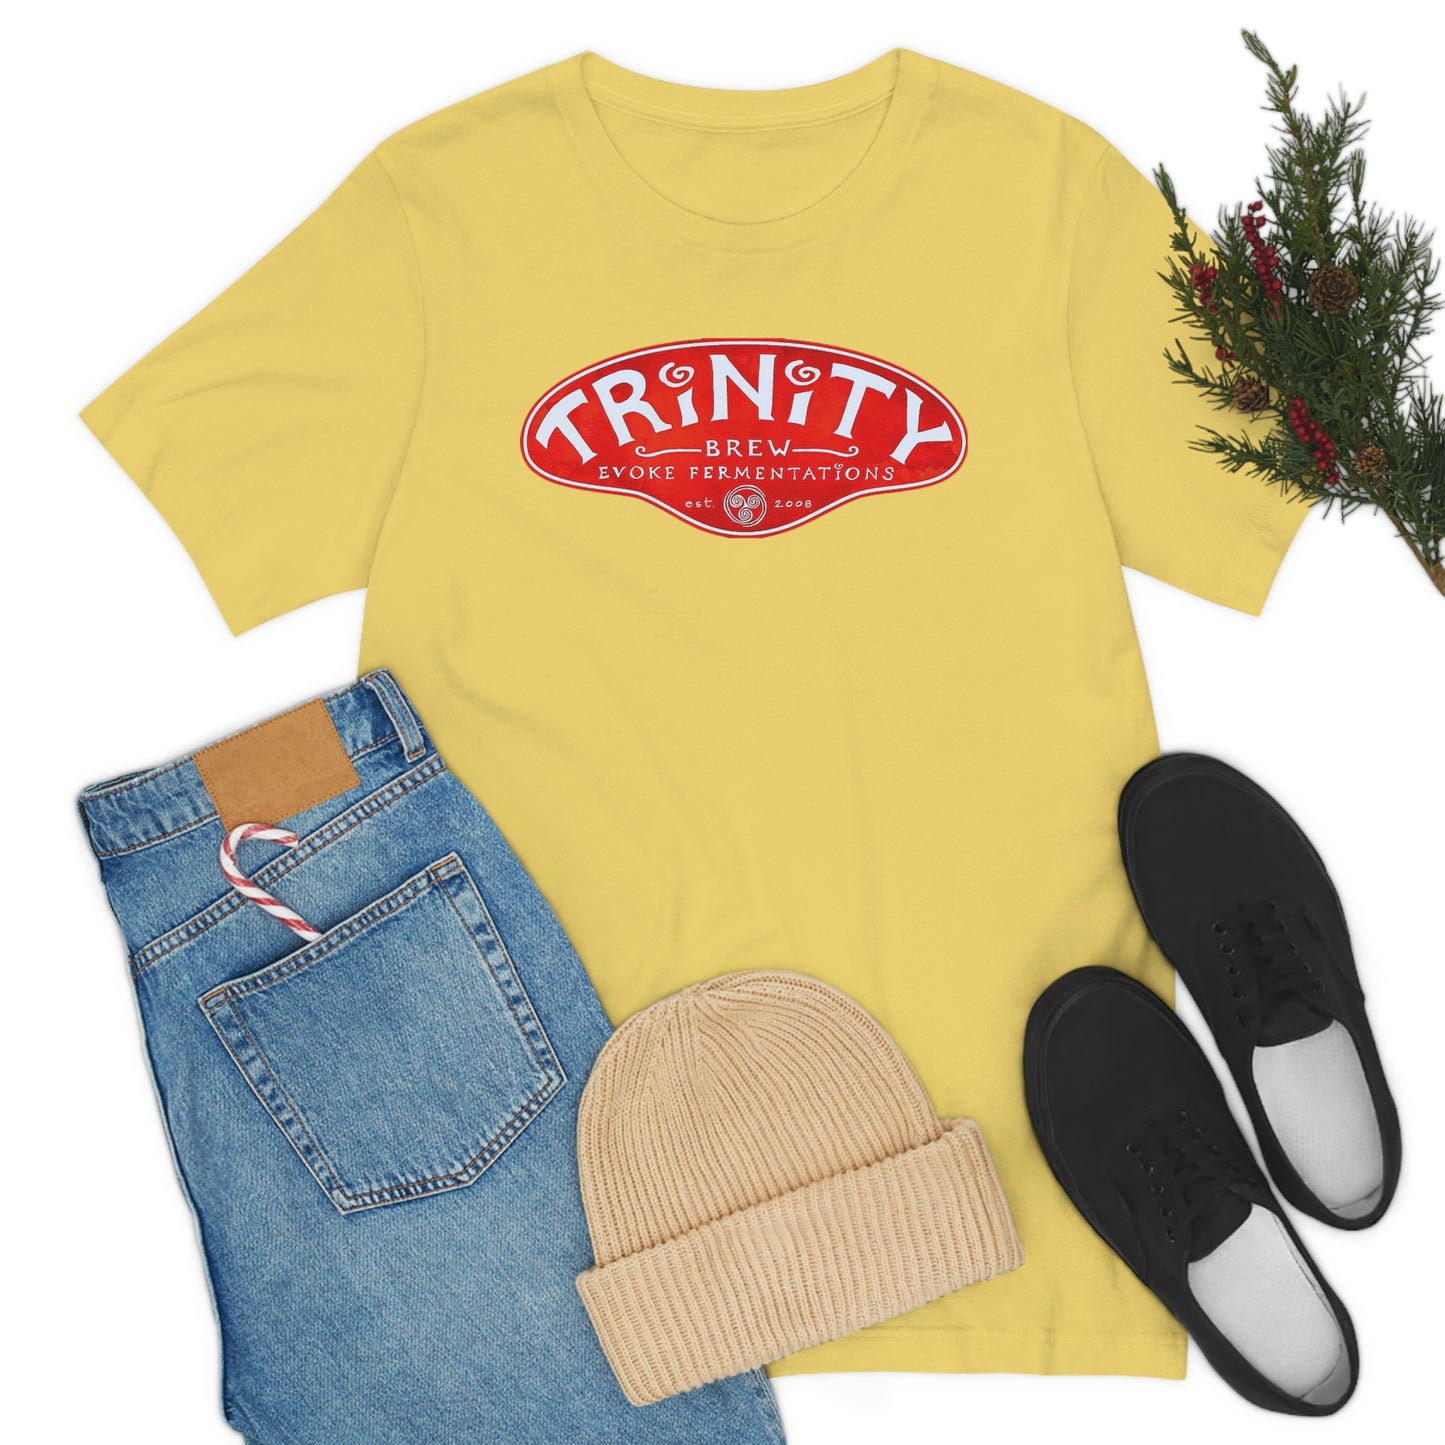 Trinity Classic Logo T-shirt